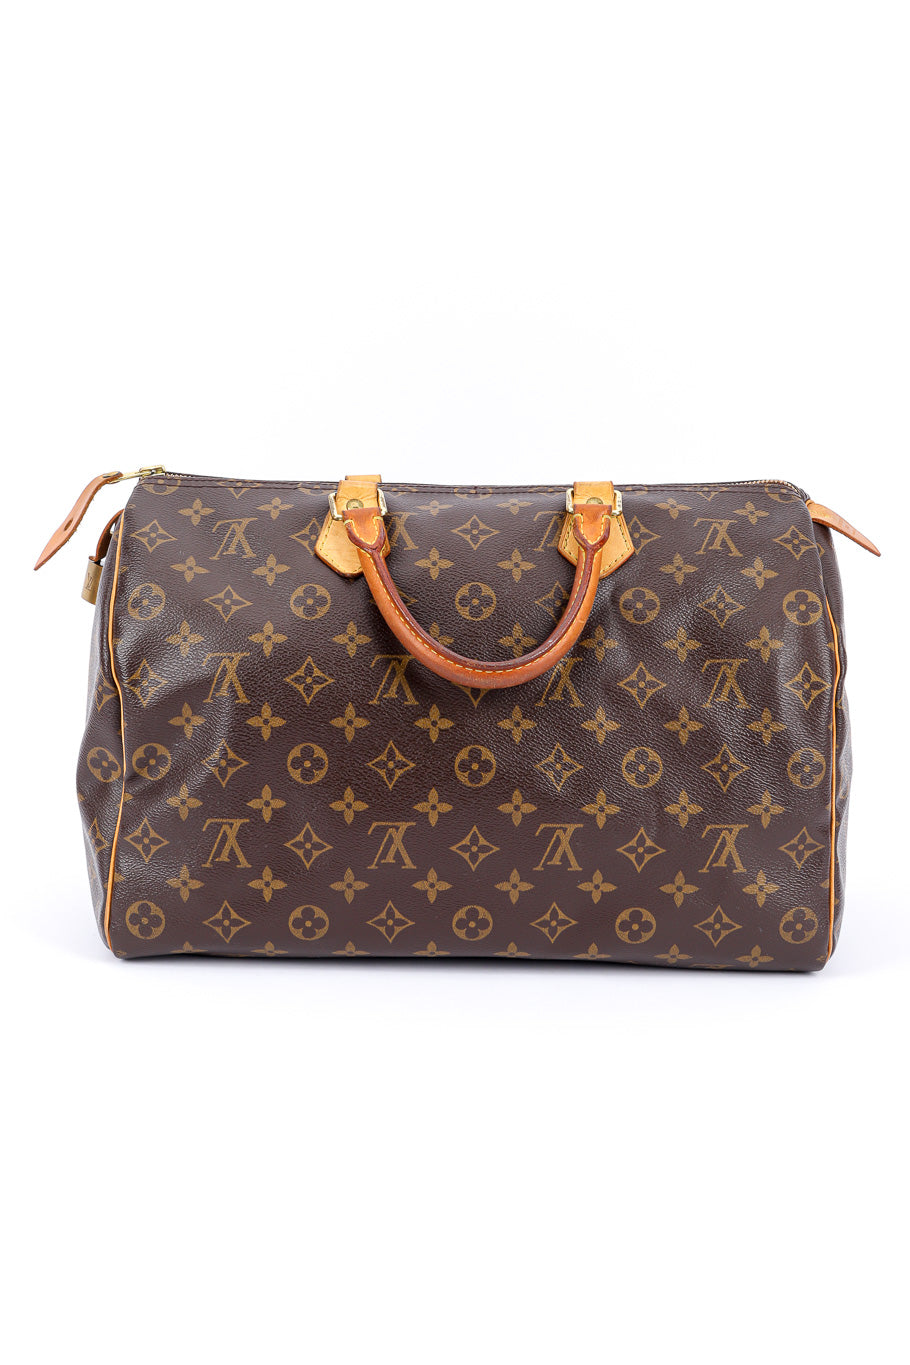 Sold at Auction: Louis Vuitton Speedy 30 Handbag - Monogram Empreinte,  cream leather, double strap handles, with padlock (no key), original box,  label, mini brochure. 30cm long, 22cm high.